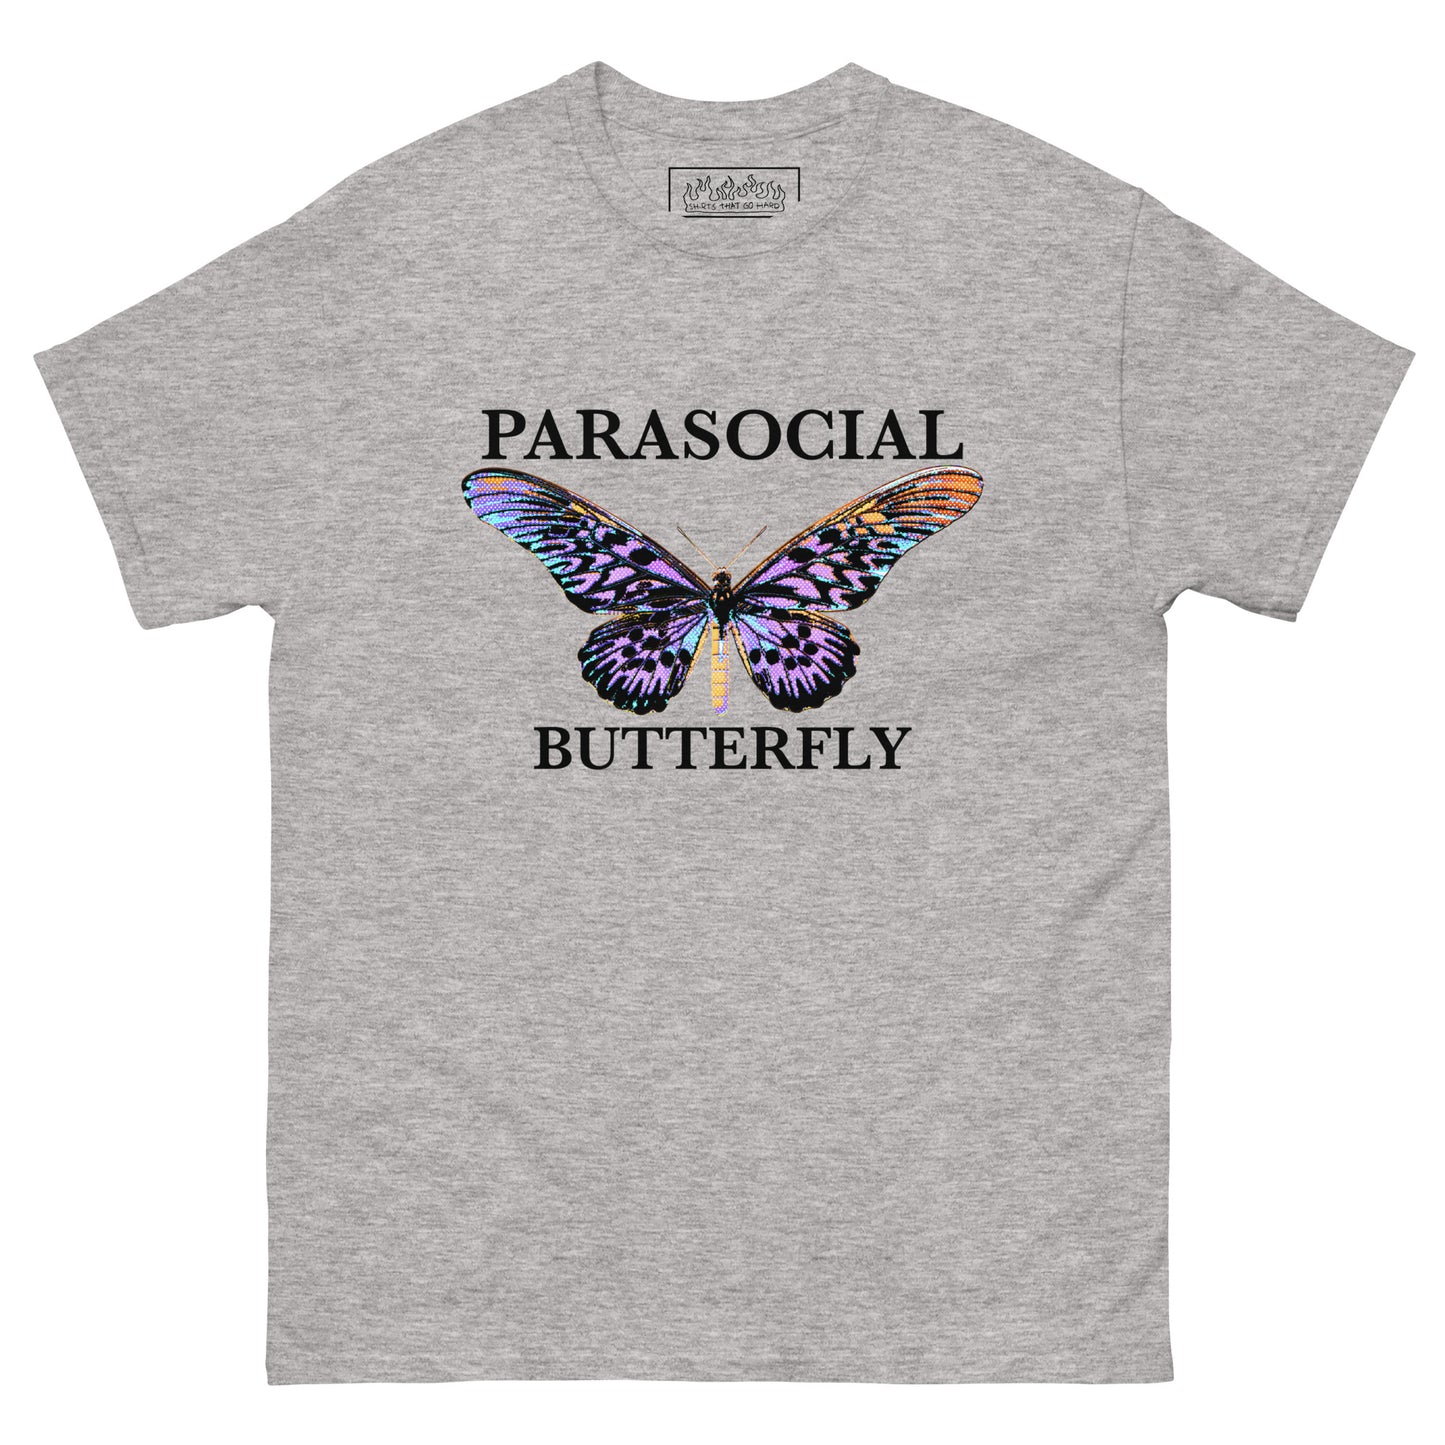 Parasocial Butterfly.